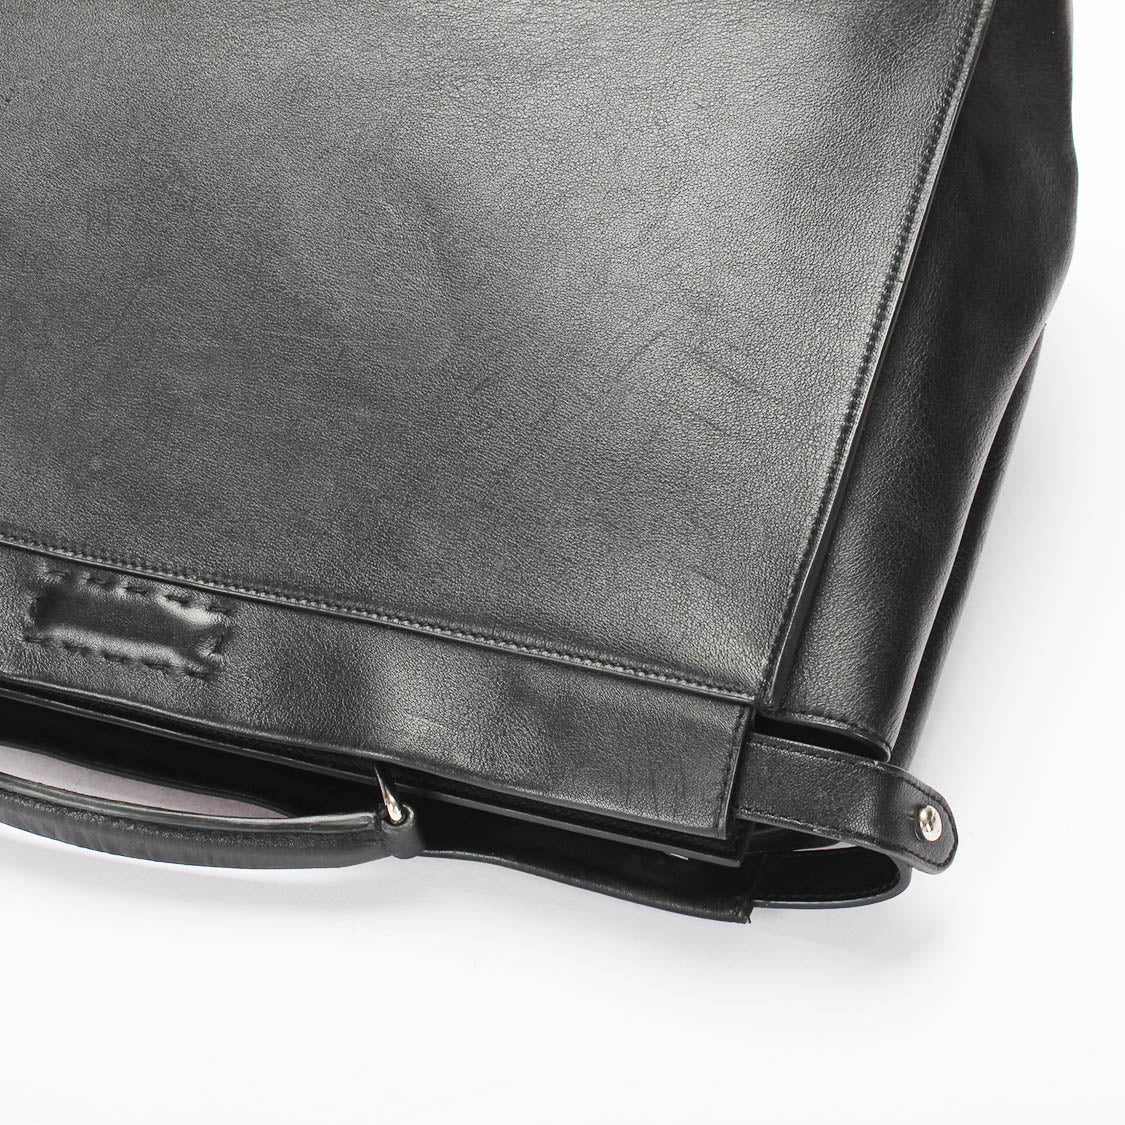 Peekaboo Leather Handbag